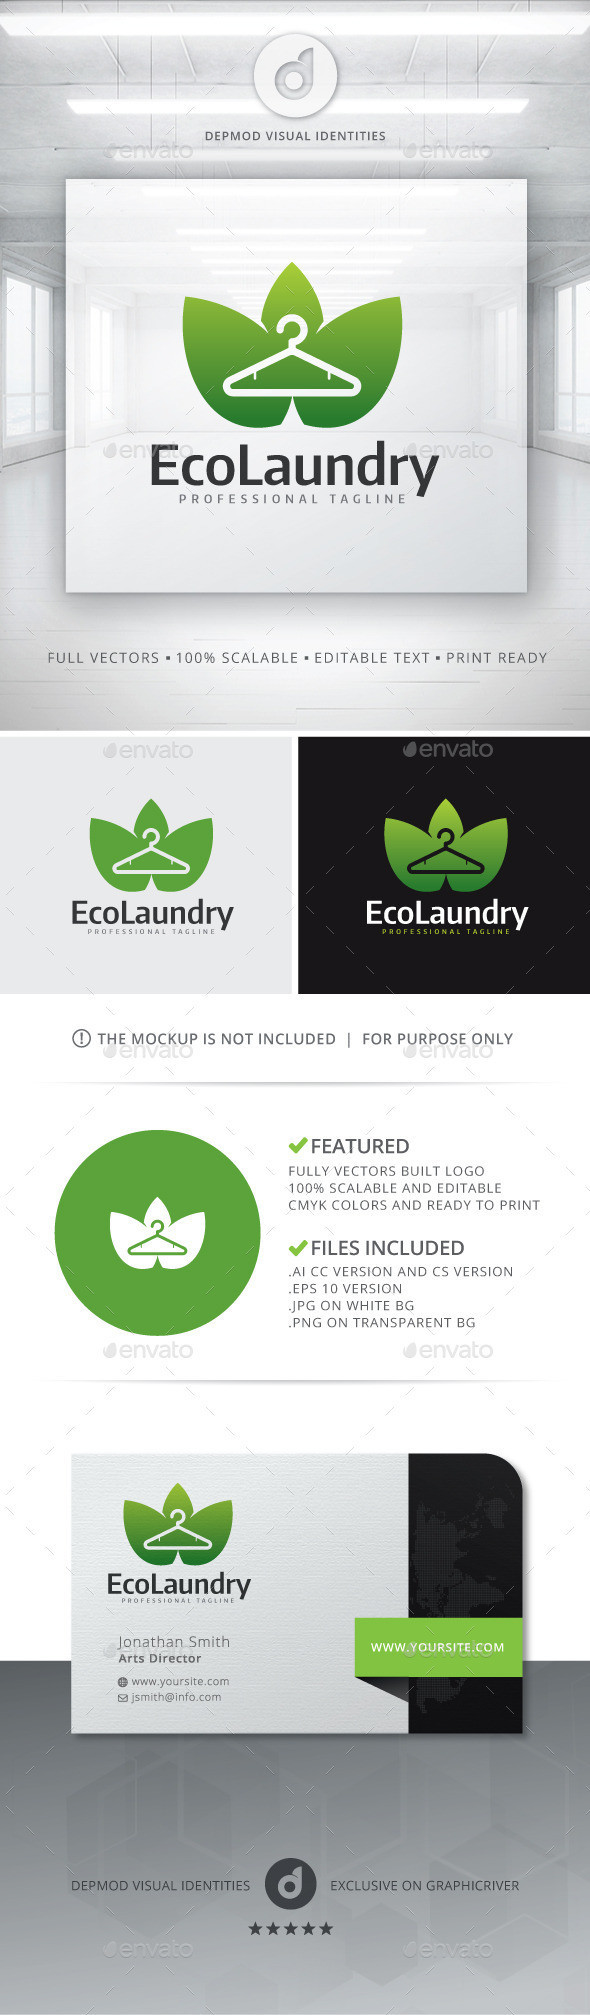 Eco laundry logo